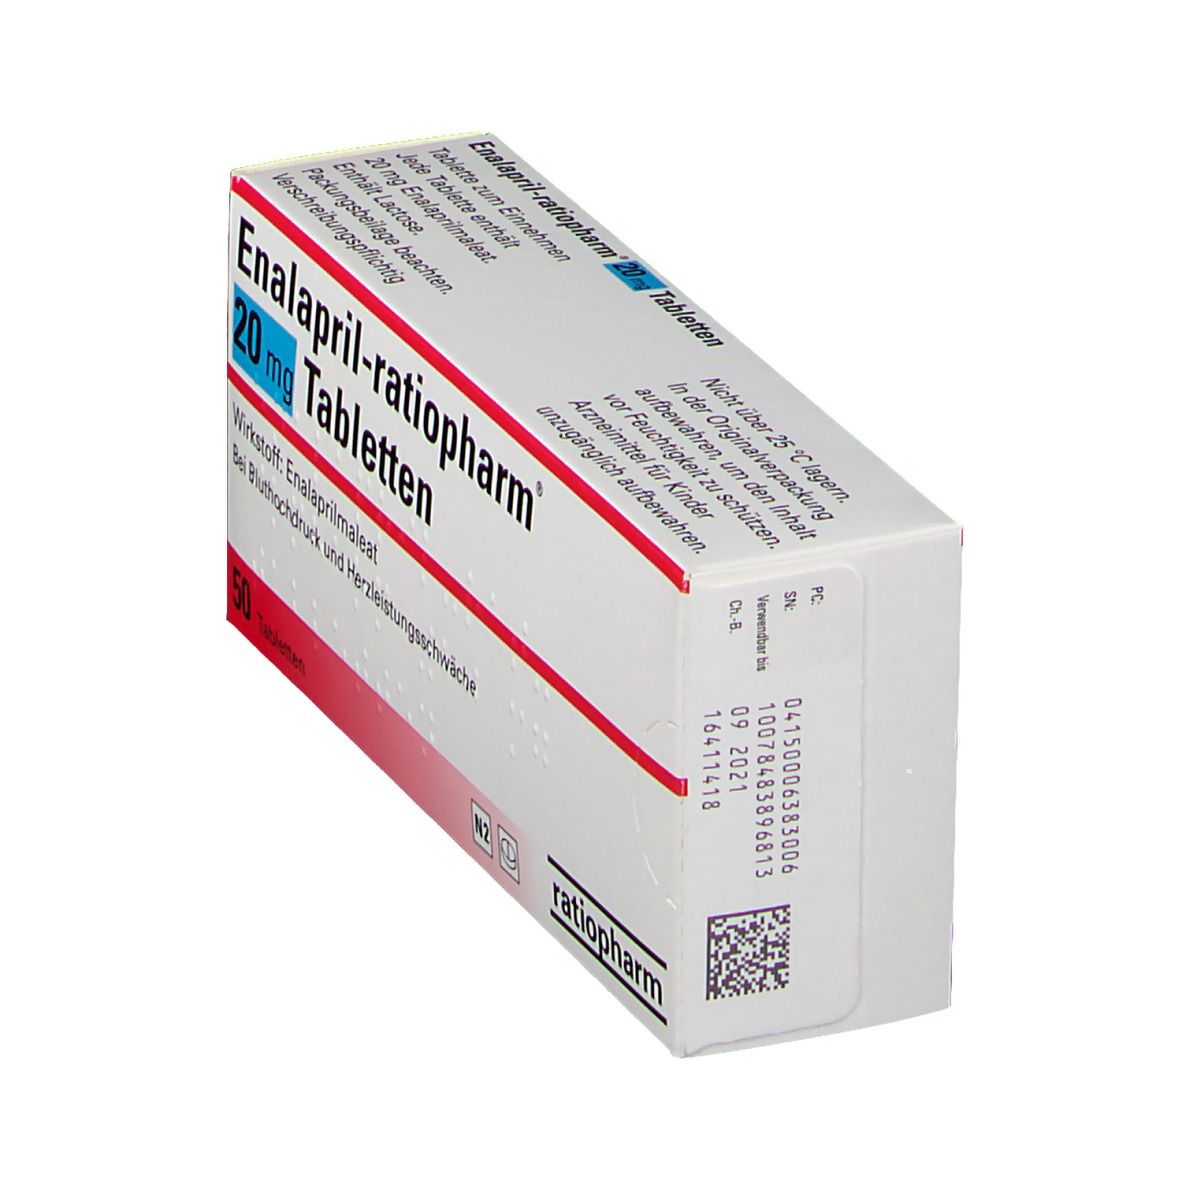 Enalapril-ratiopharm® 20 mg